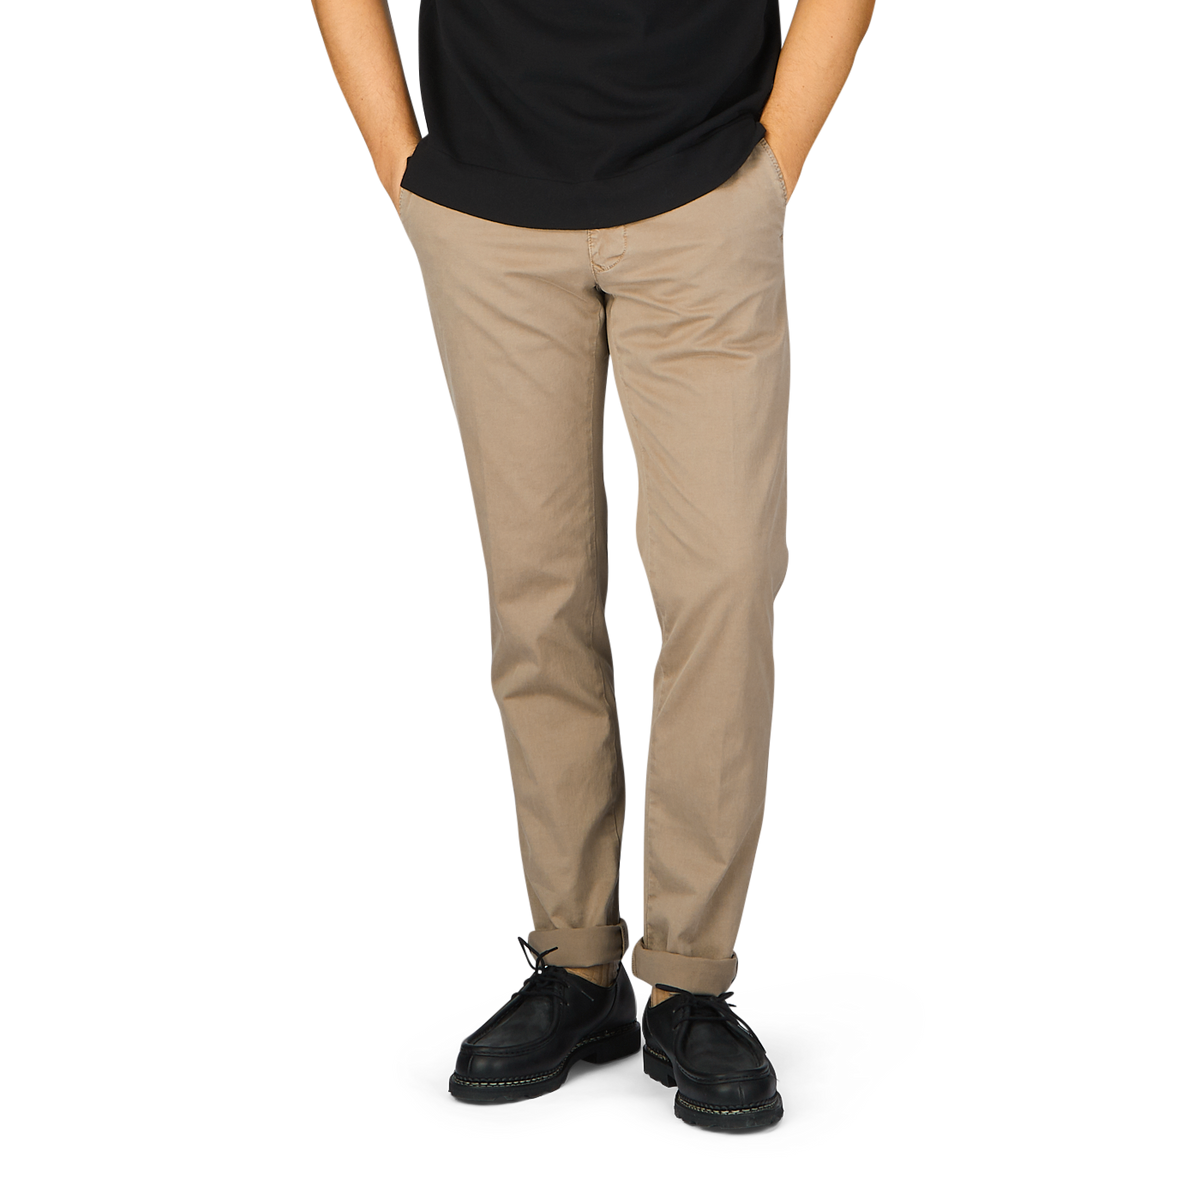 A man wearing a black cotton t-shirt and Incotex khaki chinos.